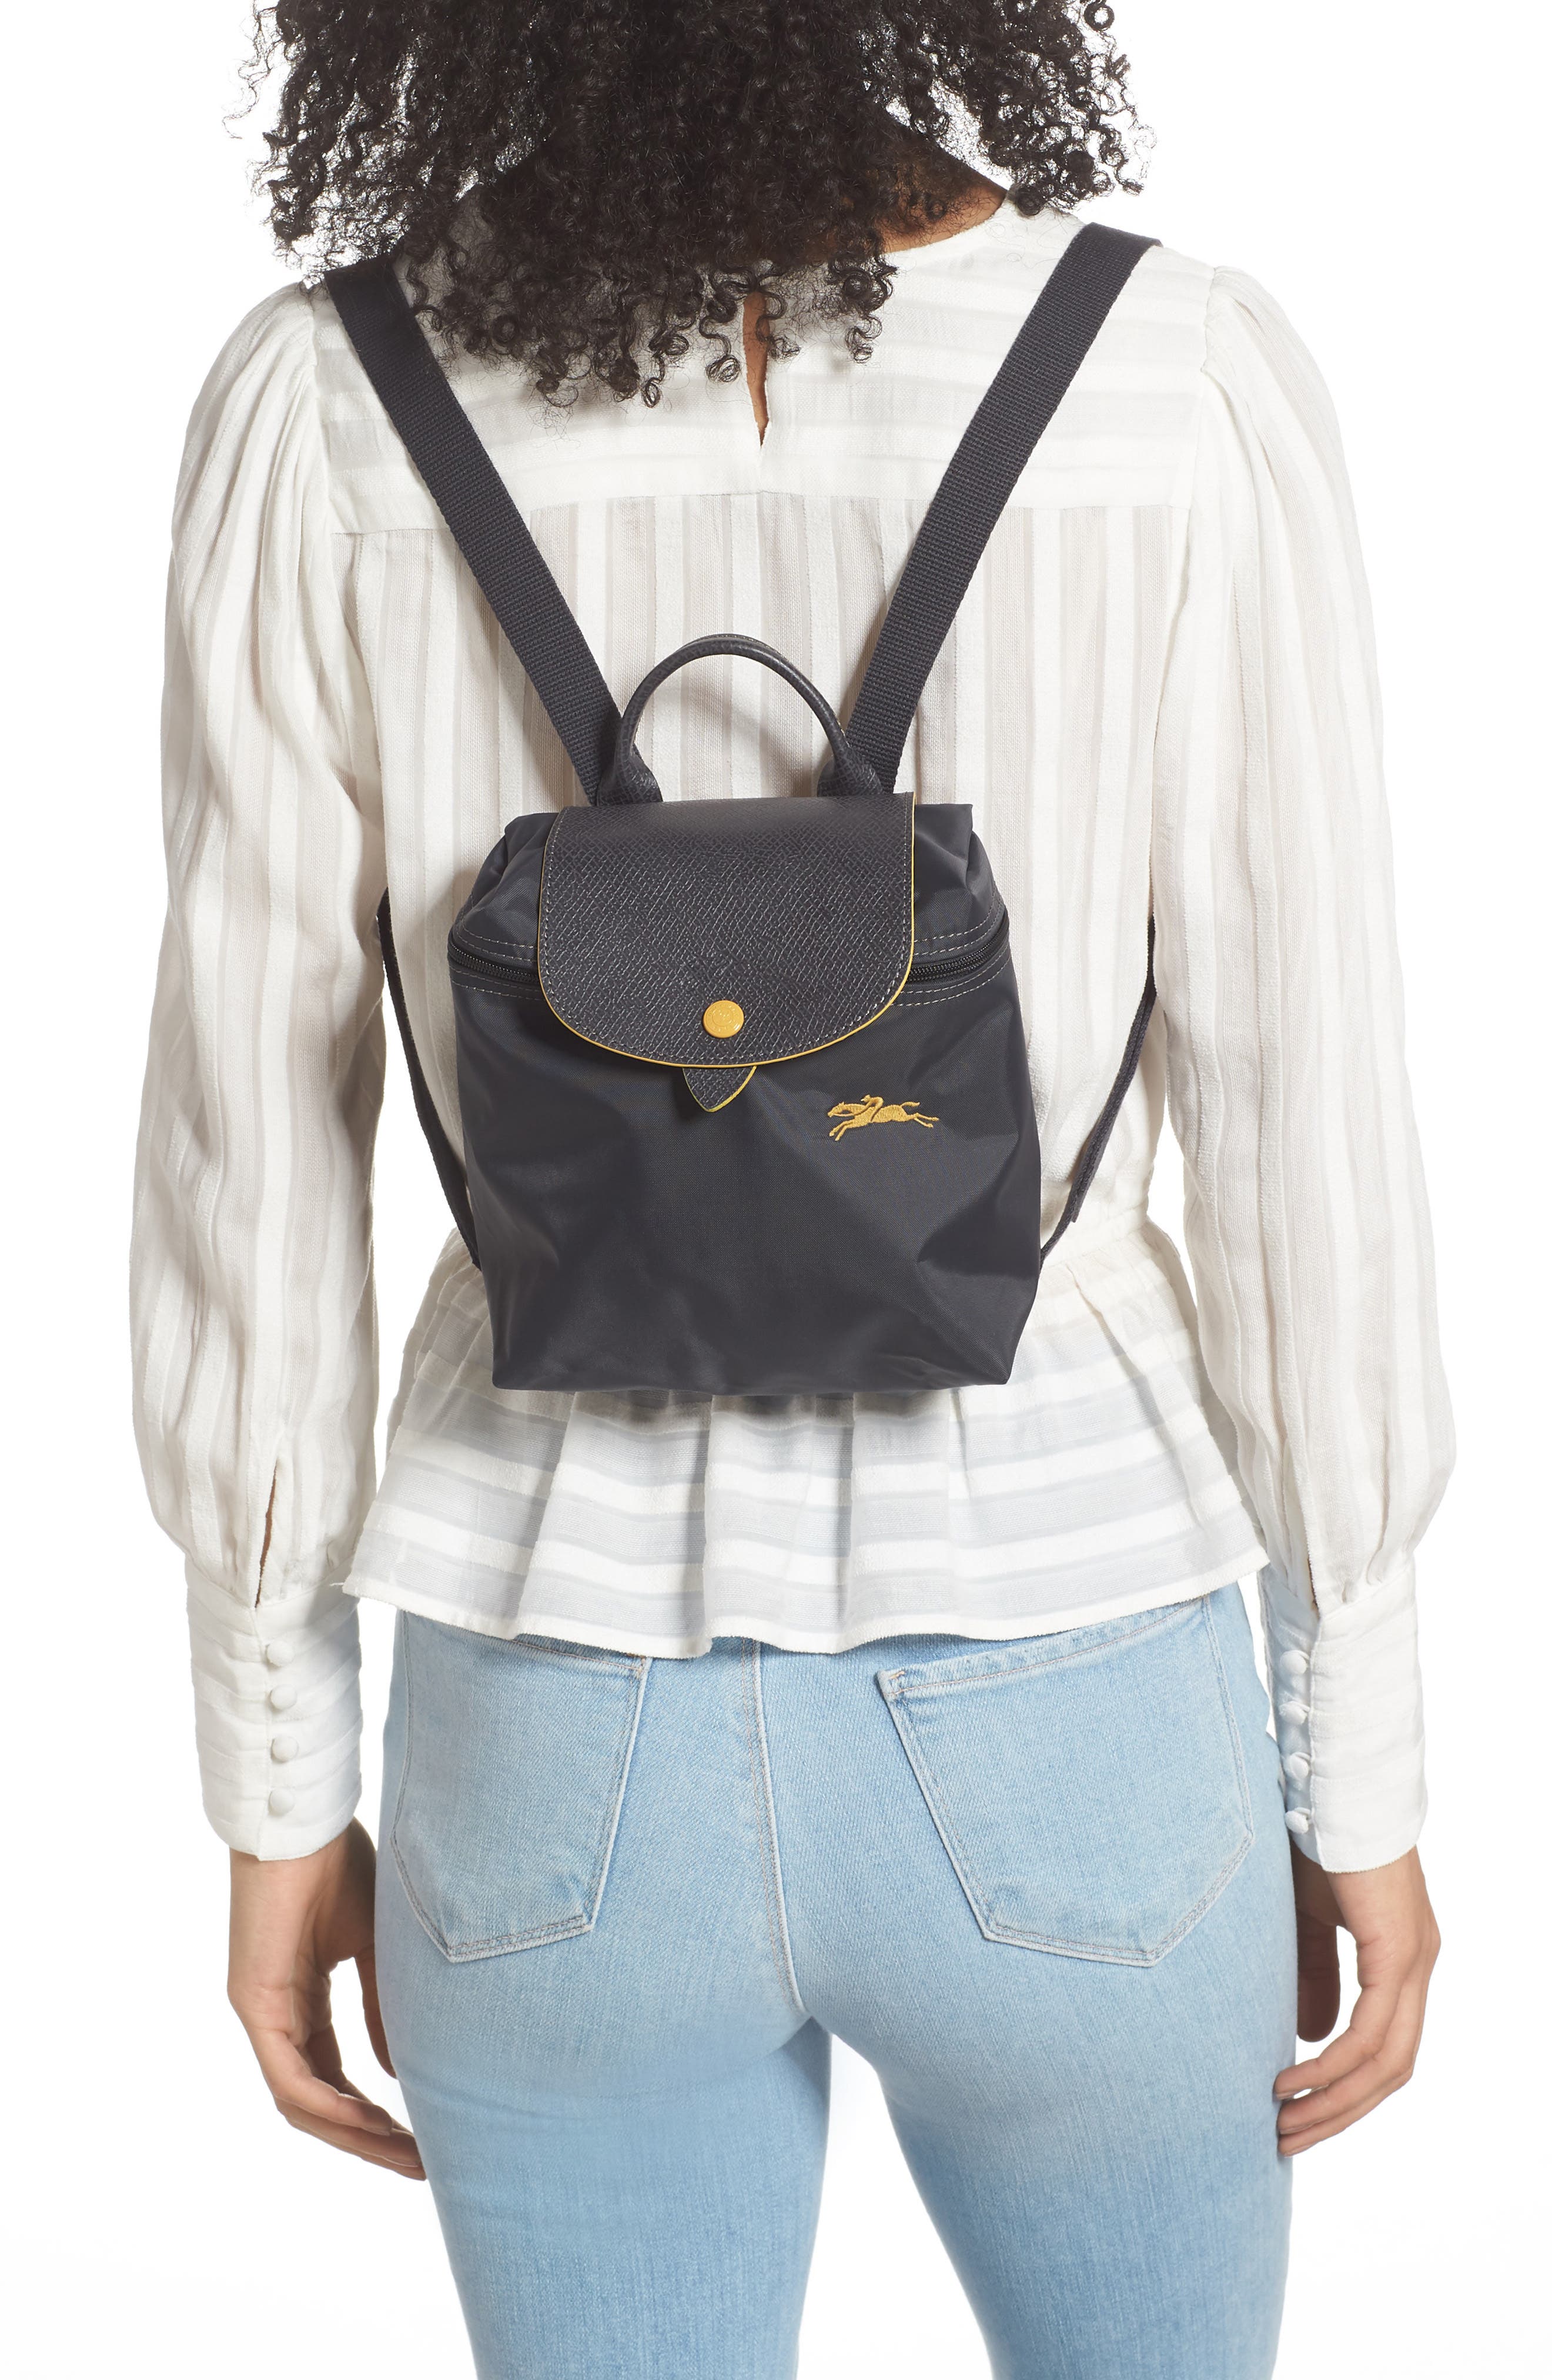 longchamp backpack mini